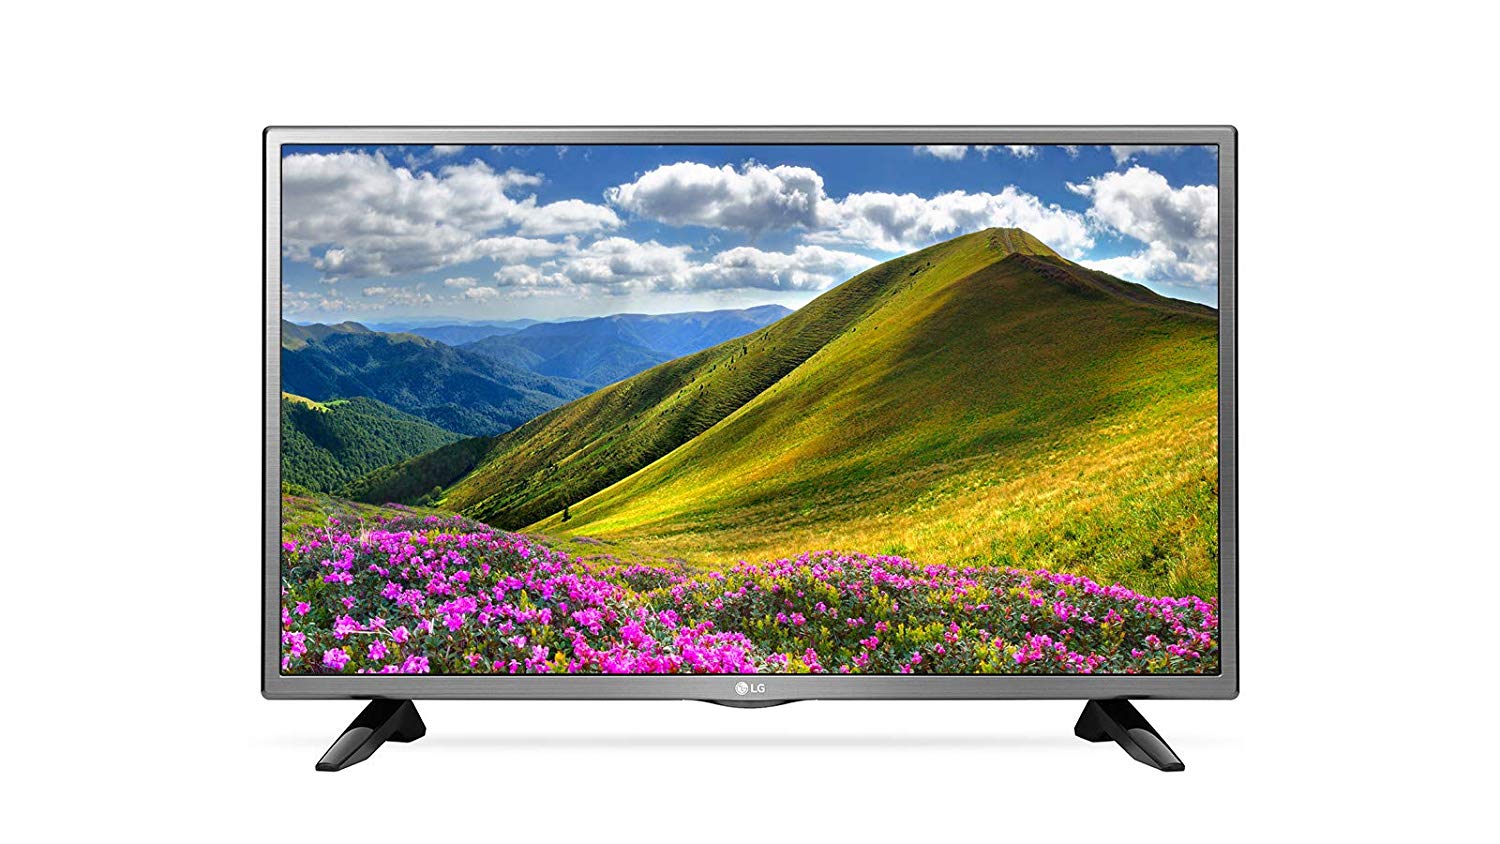 LG 32 Inch HD LED Standard TV With Built-in HD Receiver - 32LJ520U